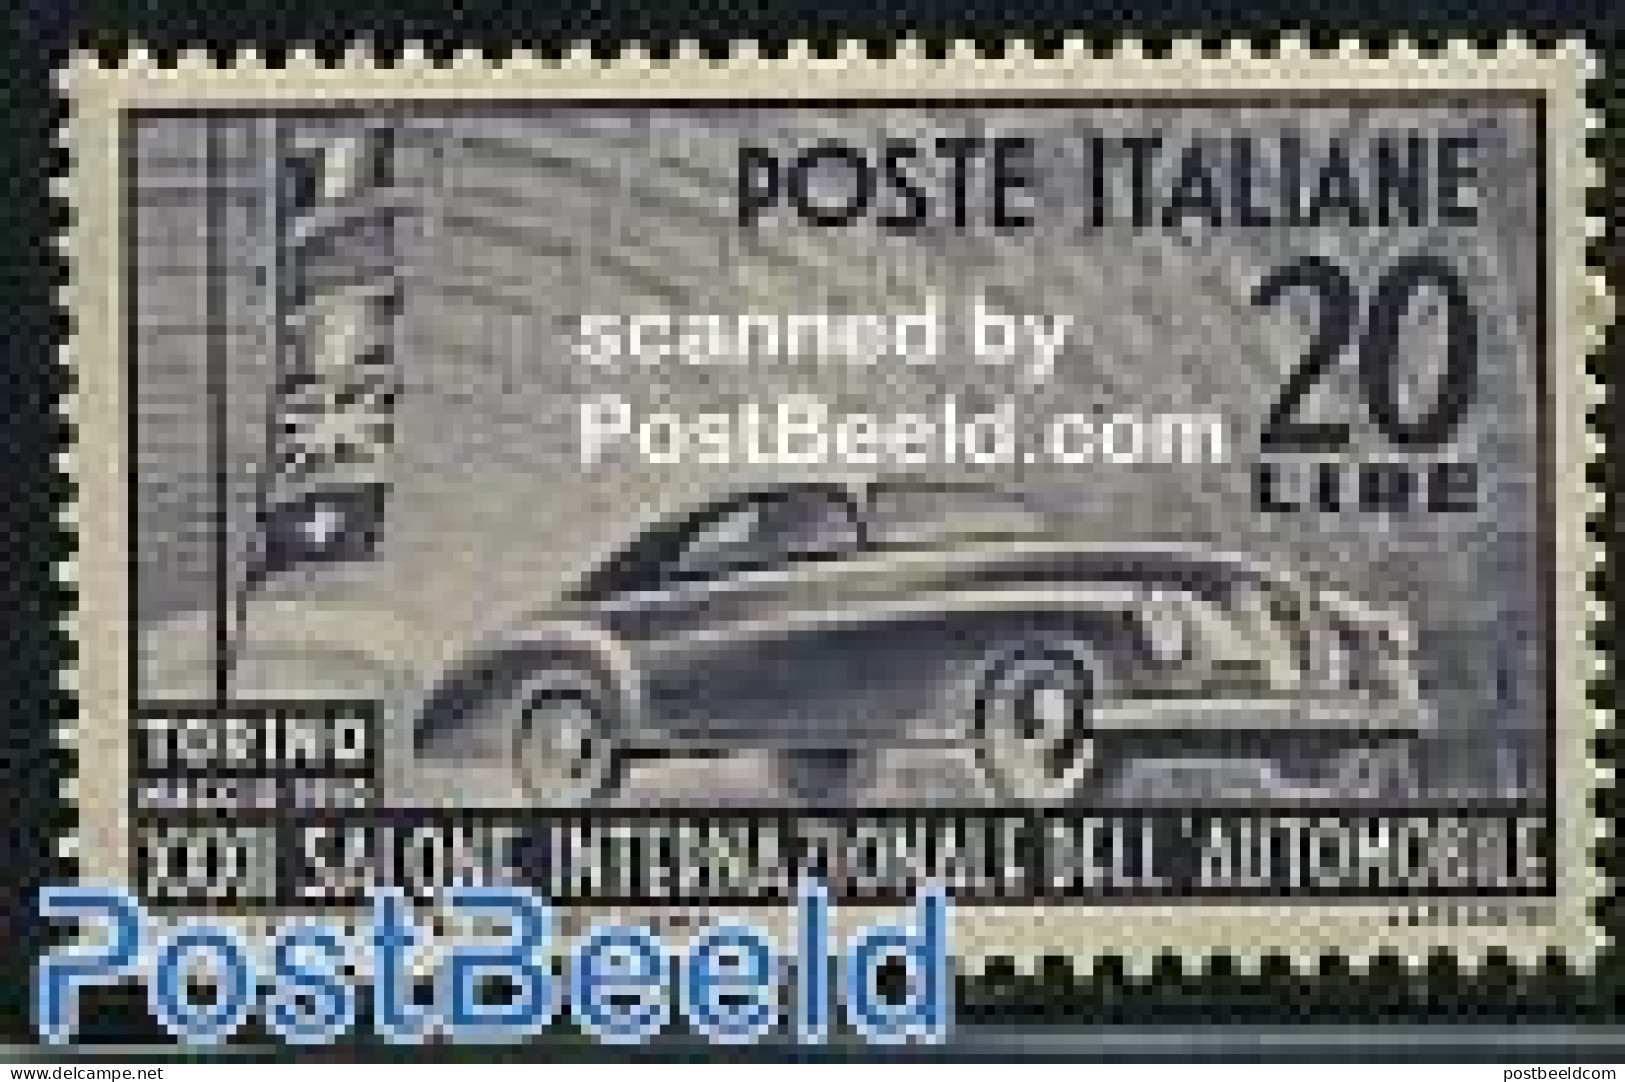 Italy 1950 Torino Auto Salon 1v, Mint NH, Transport - Automobiles - Autres & Non Classés